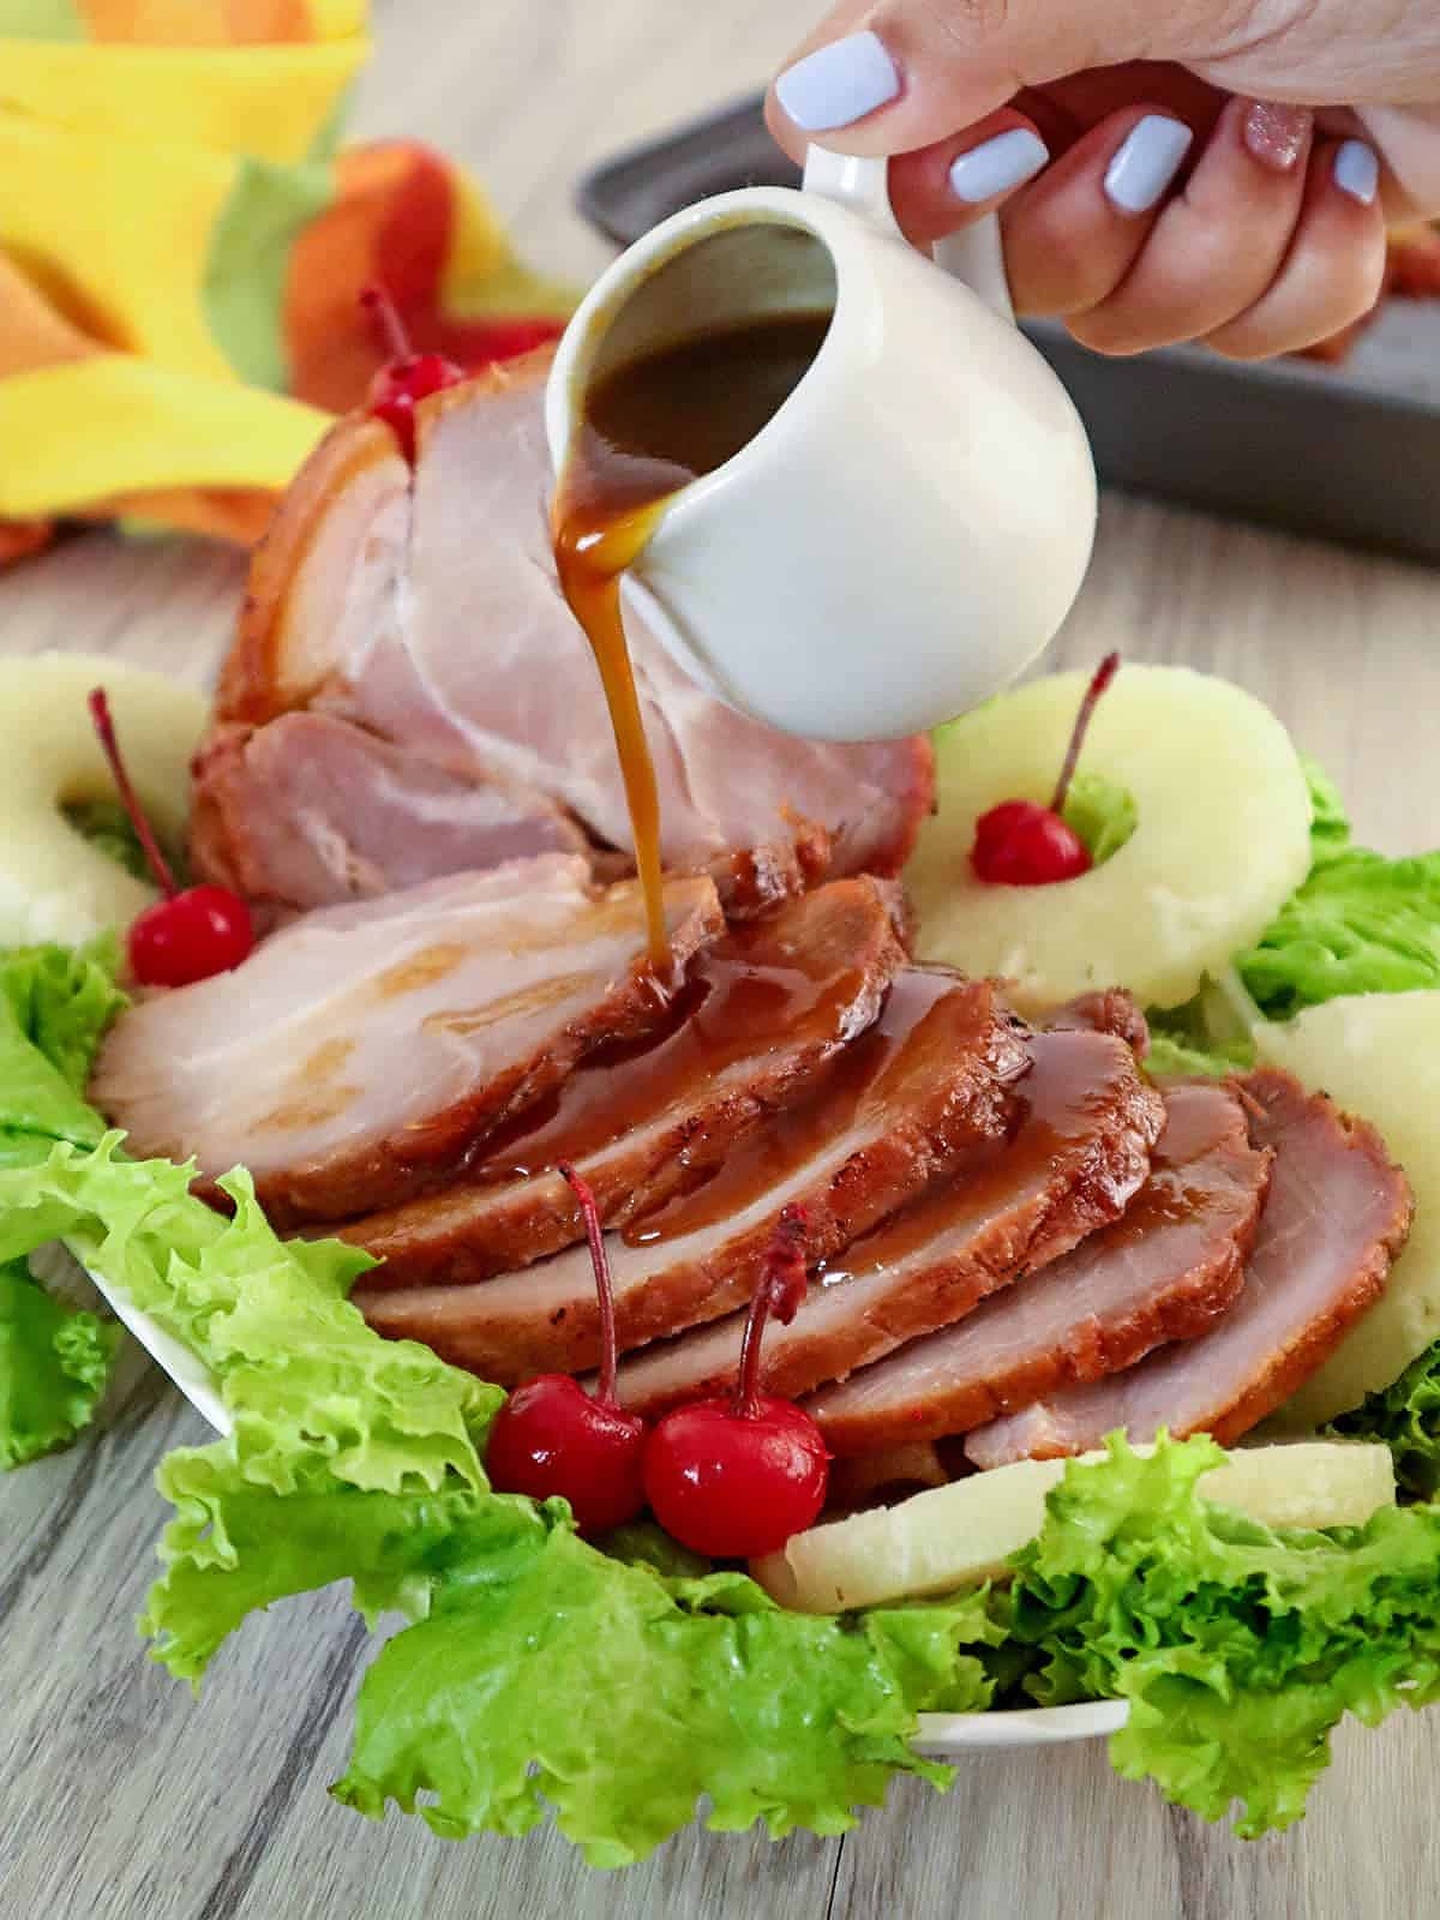 Captivating Juicy Ham With Glaze